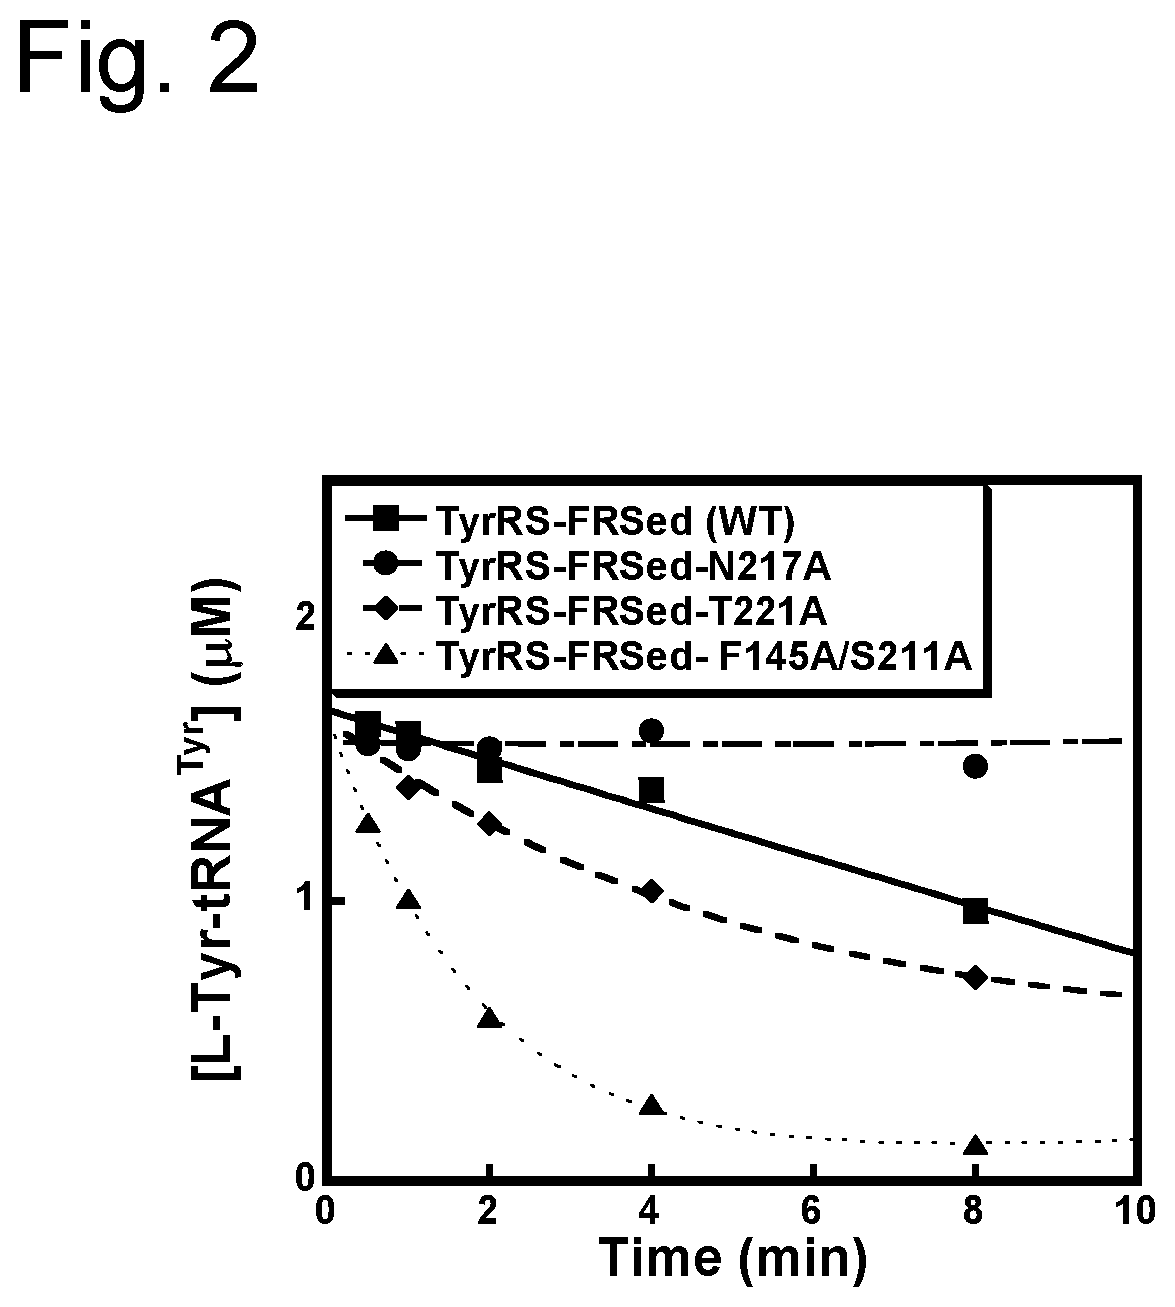 D-stereospecific aminoacyl-tRNA synthetase and method of producing D-stereospecific aminoacyl-tRNA synthetase